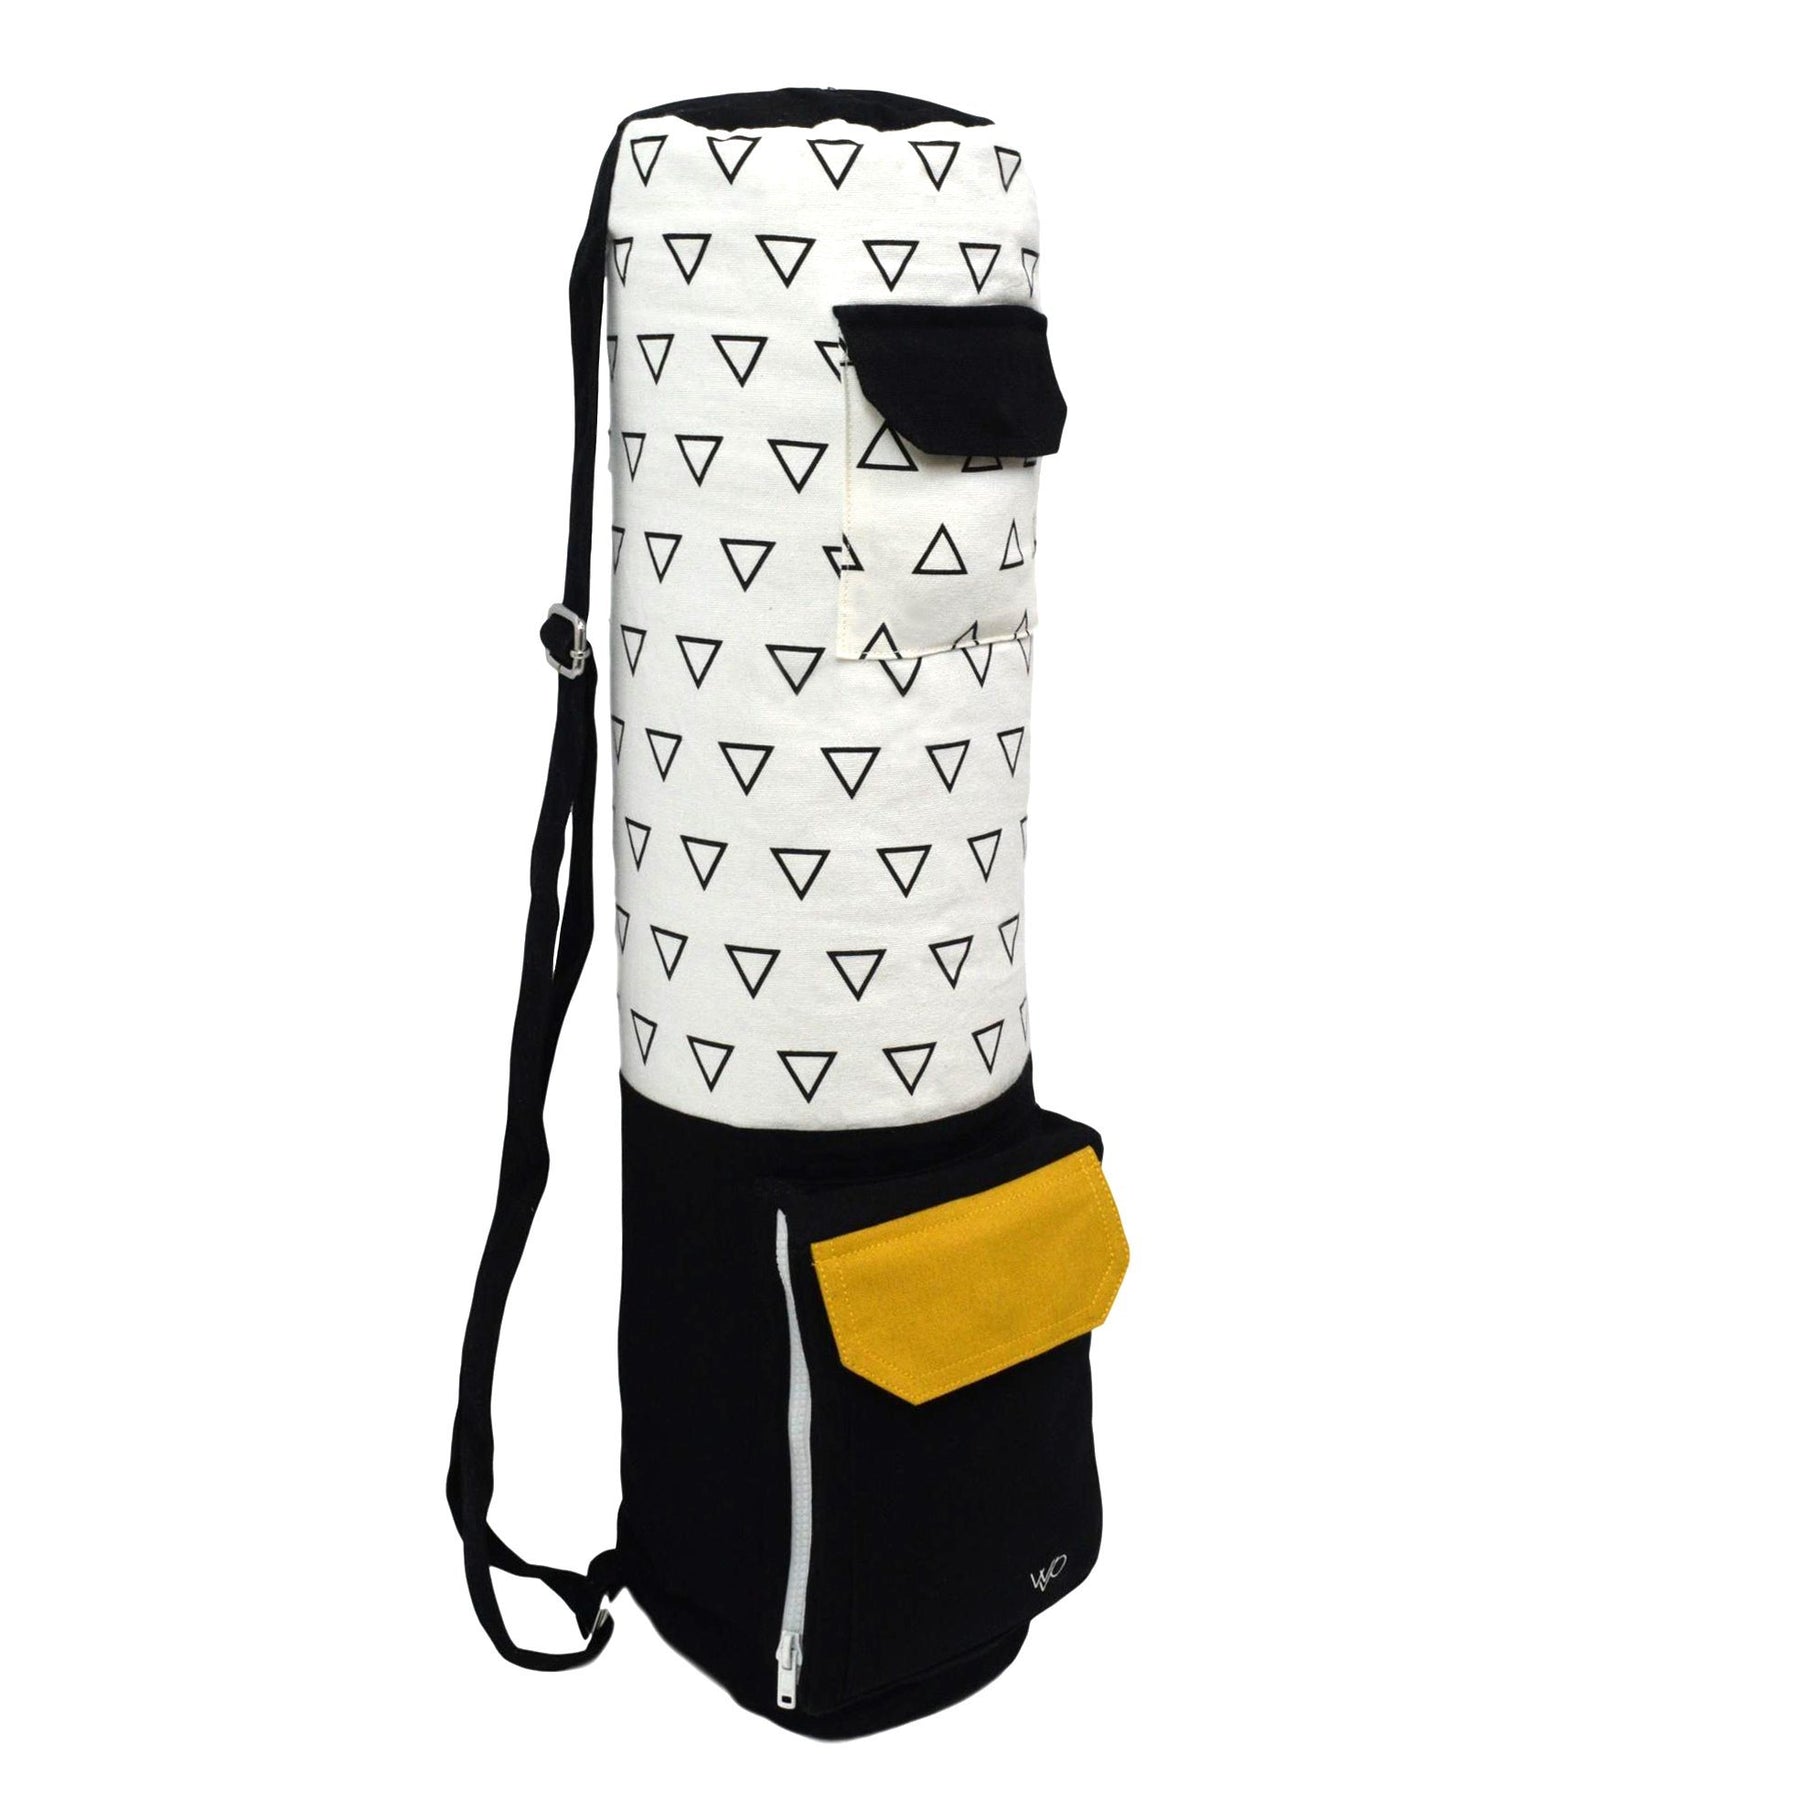 Yoga Mat Bag Mesh Carrier Net Bag - Best Price in Singapore - Jan